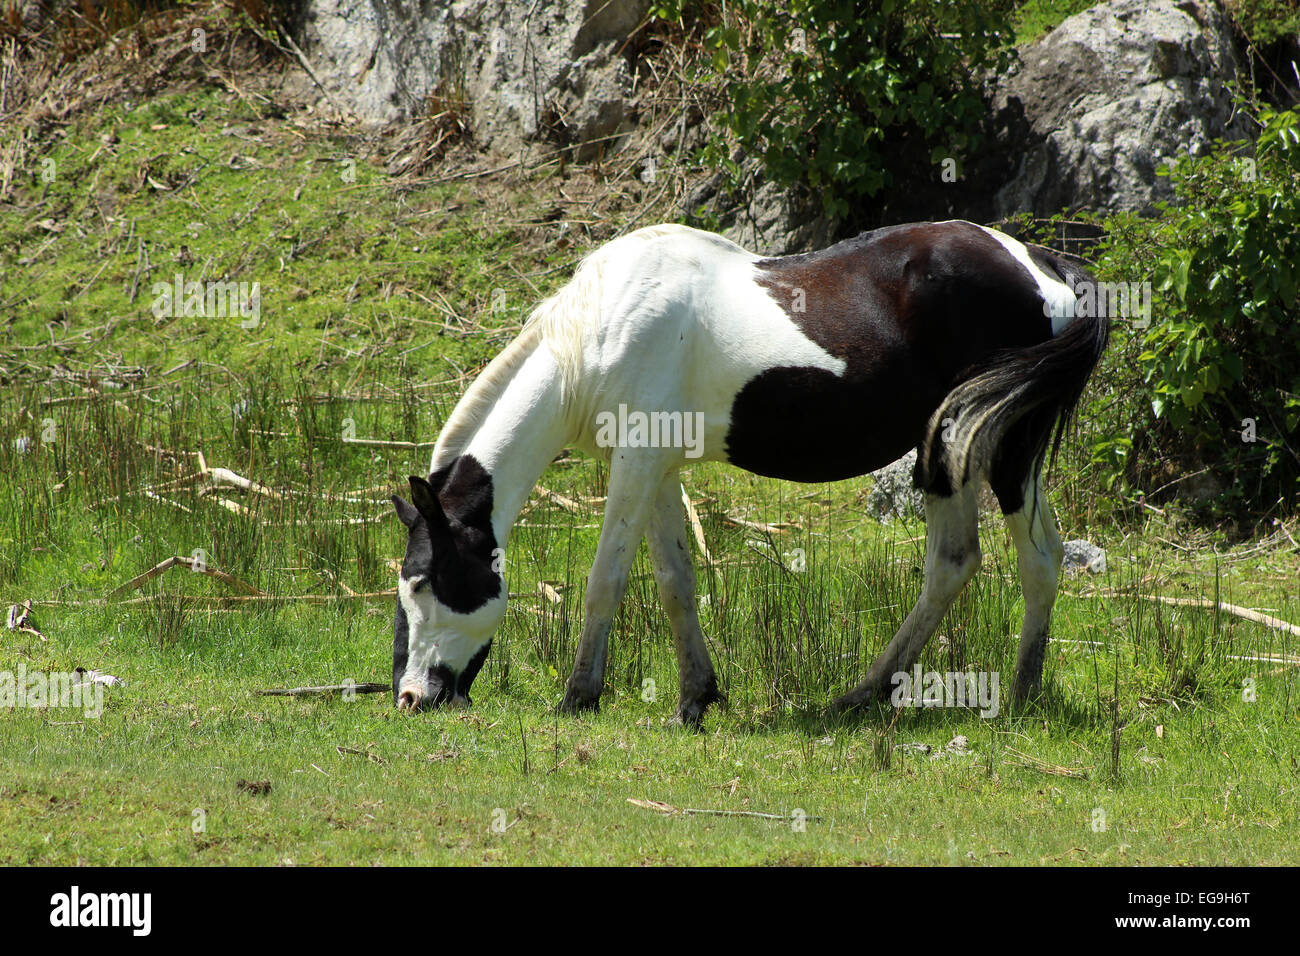 A horse in a farmers pasture in Cotacachi, Ecuador Stock Photo